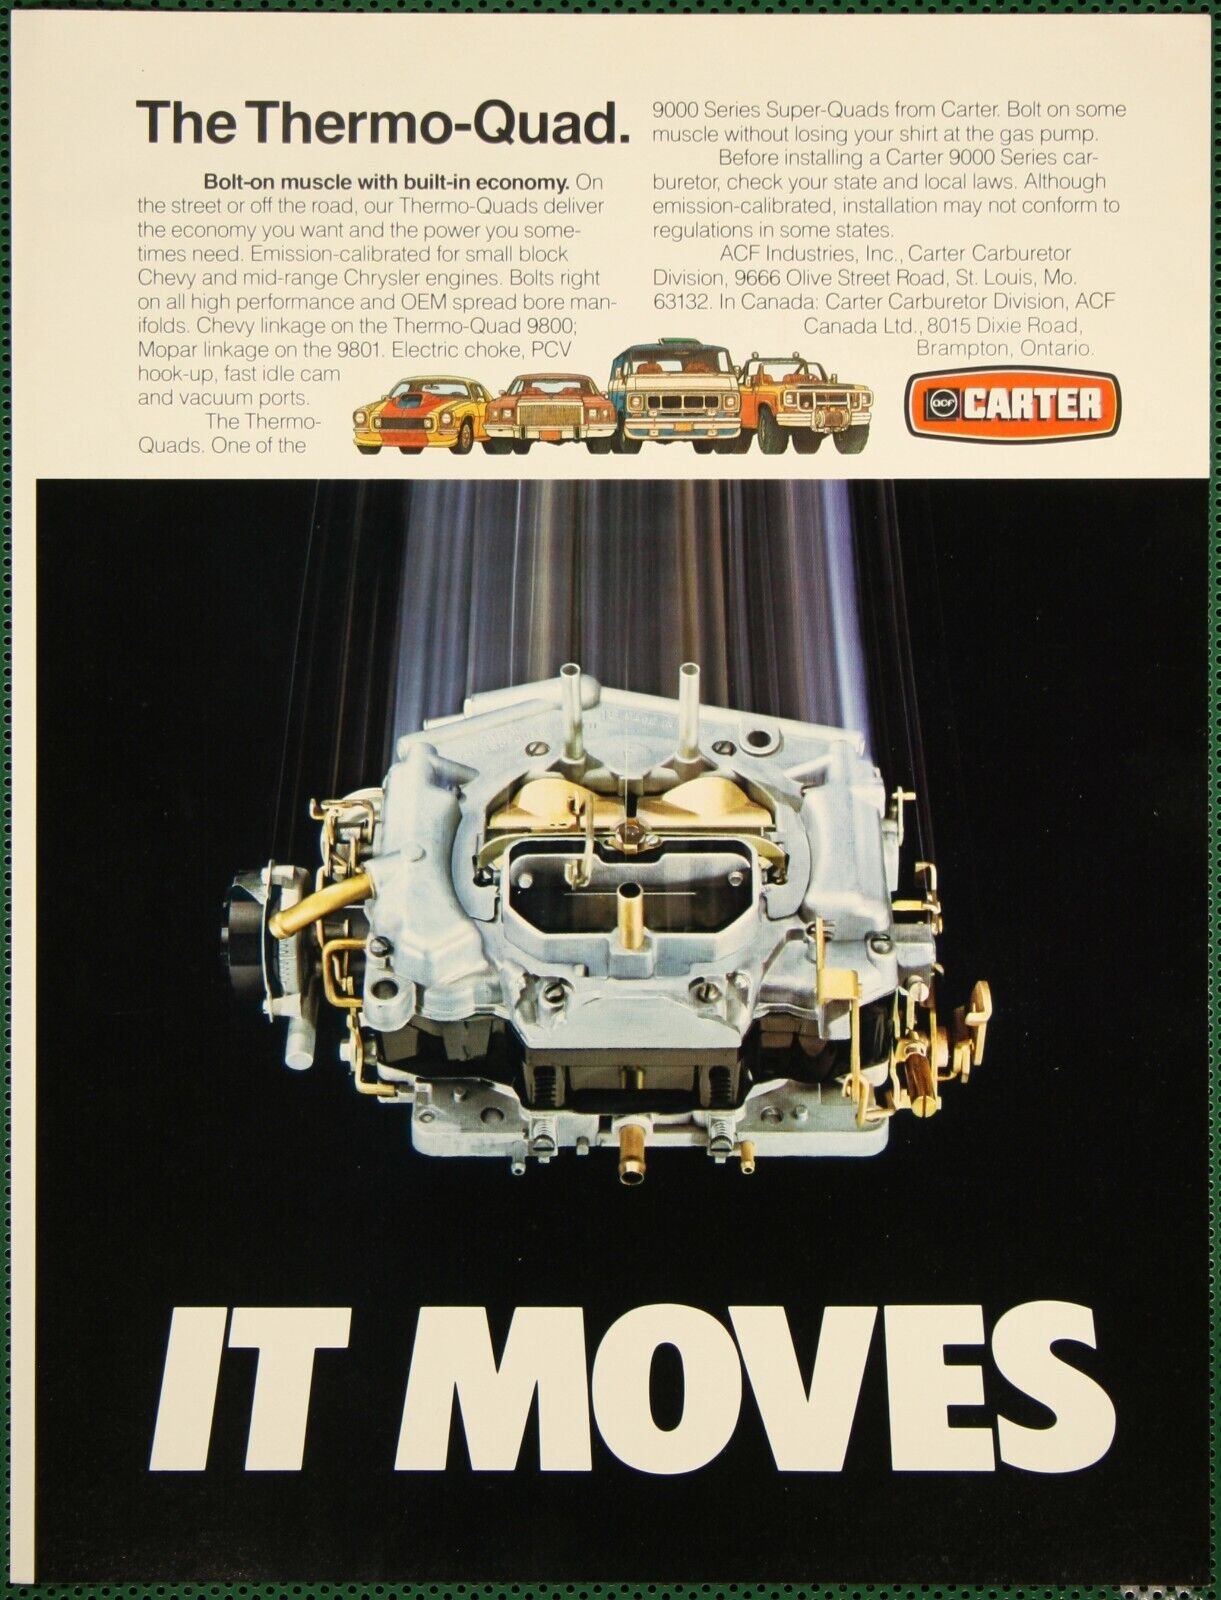 Carter Thermo Quad Carburetor 9000 Series Vintage Print Ad Feb 1979